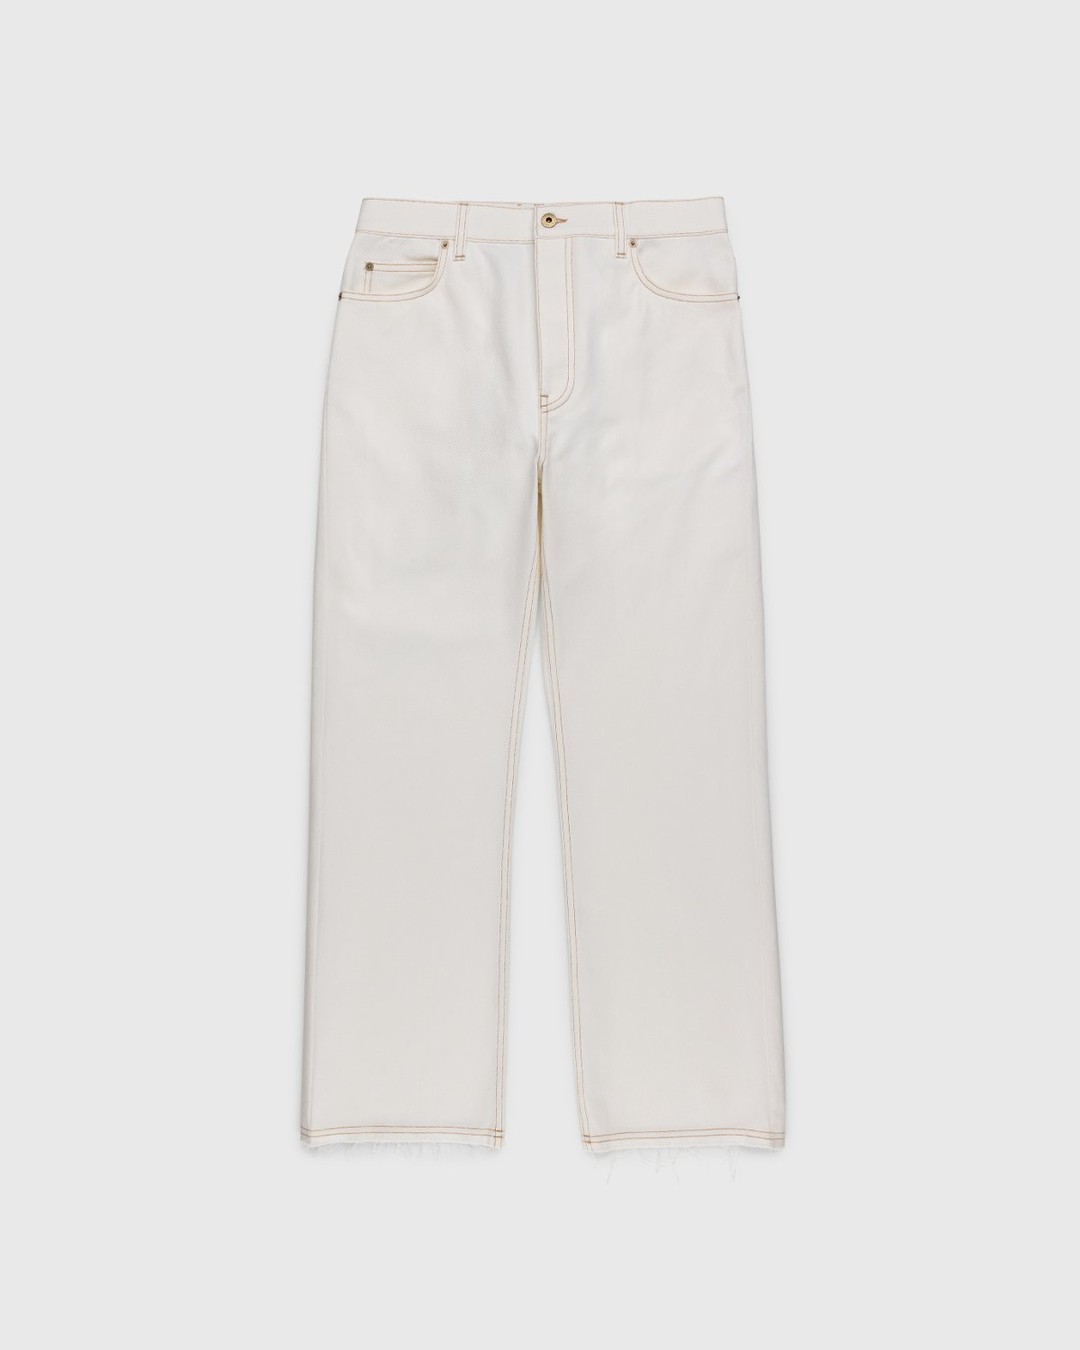 Loewe – Paula's Ibiza Boot Cut Denim Trousers White - Pants - White - Image 1